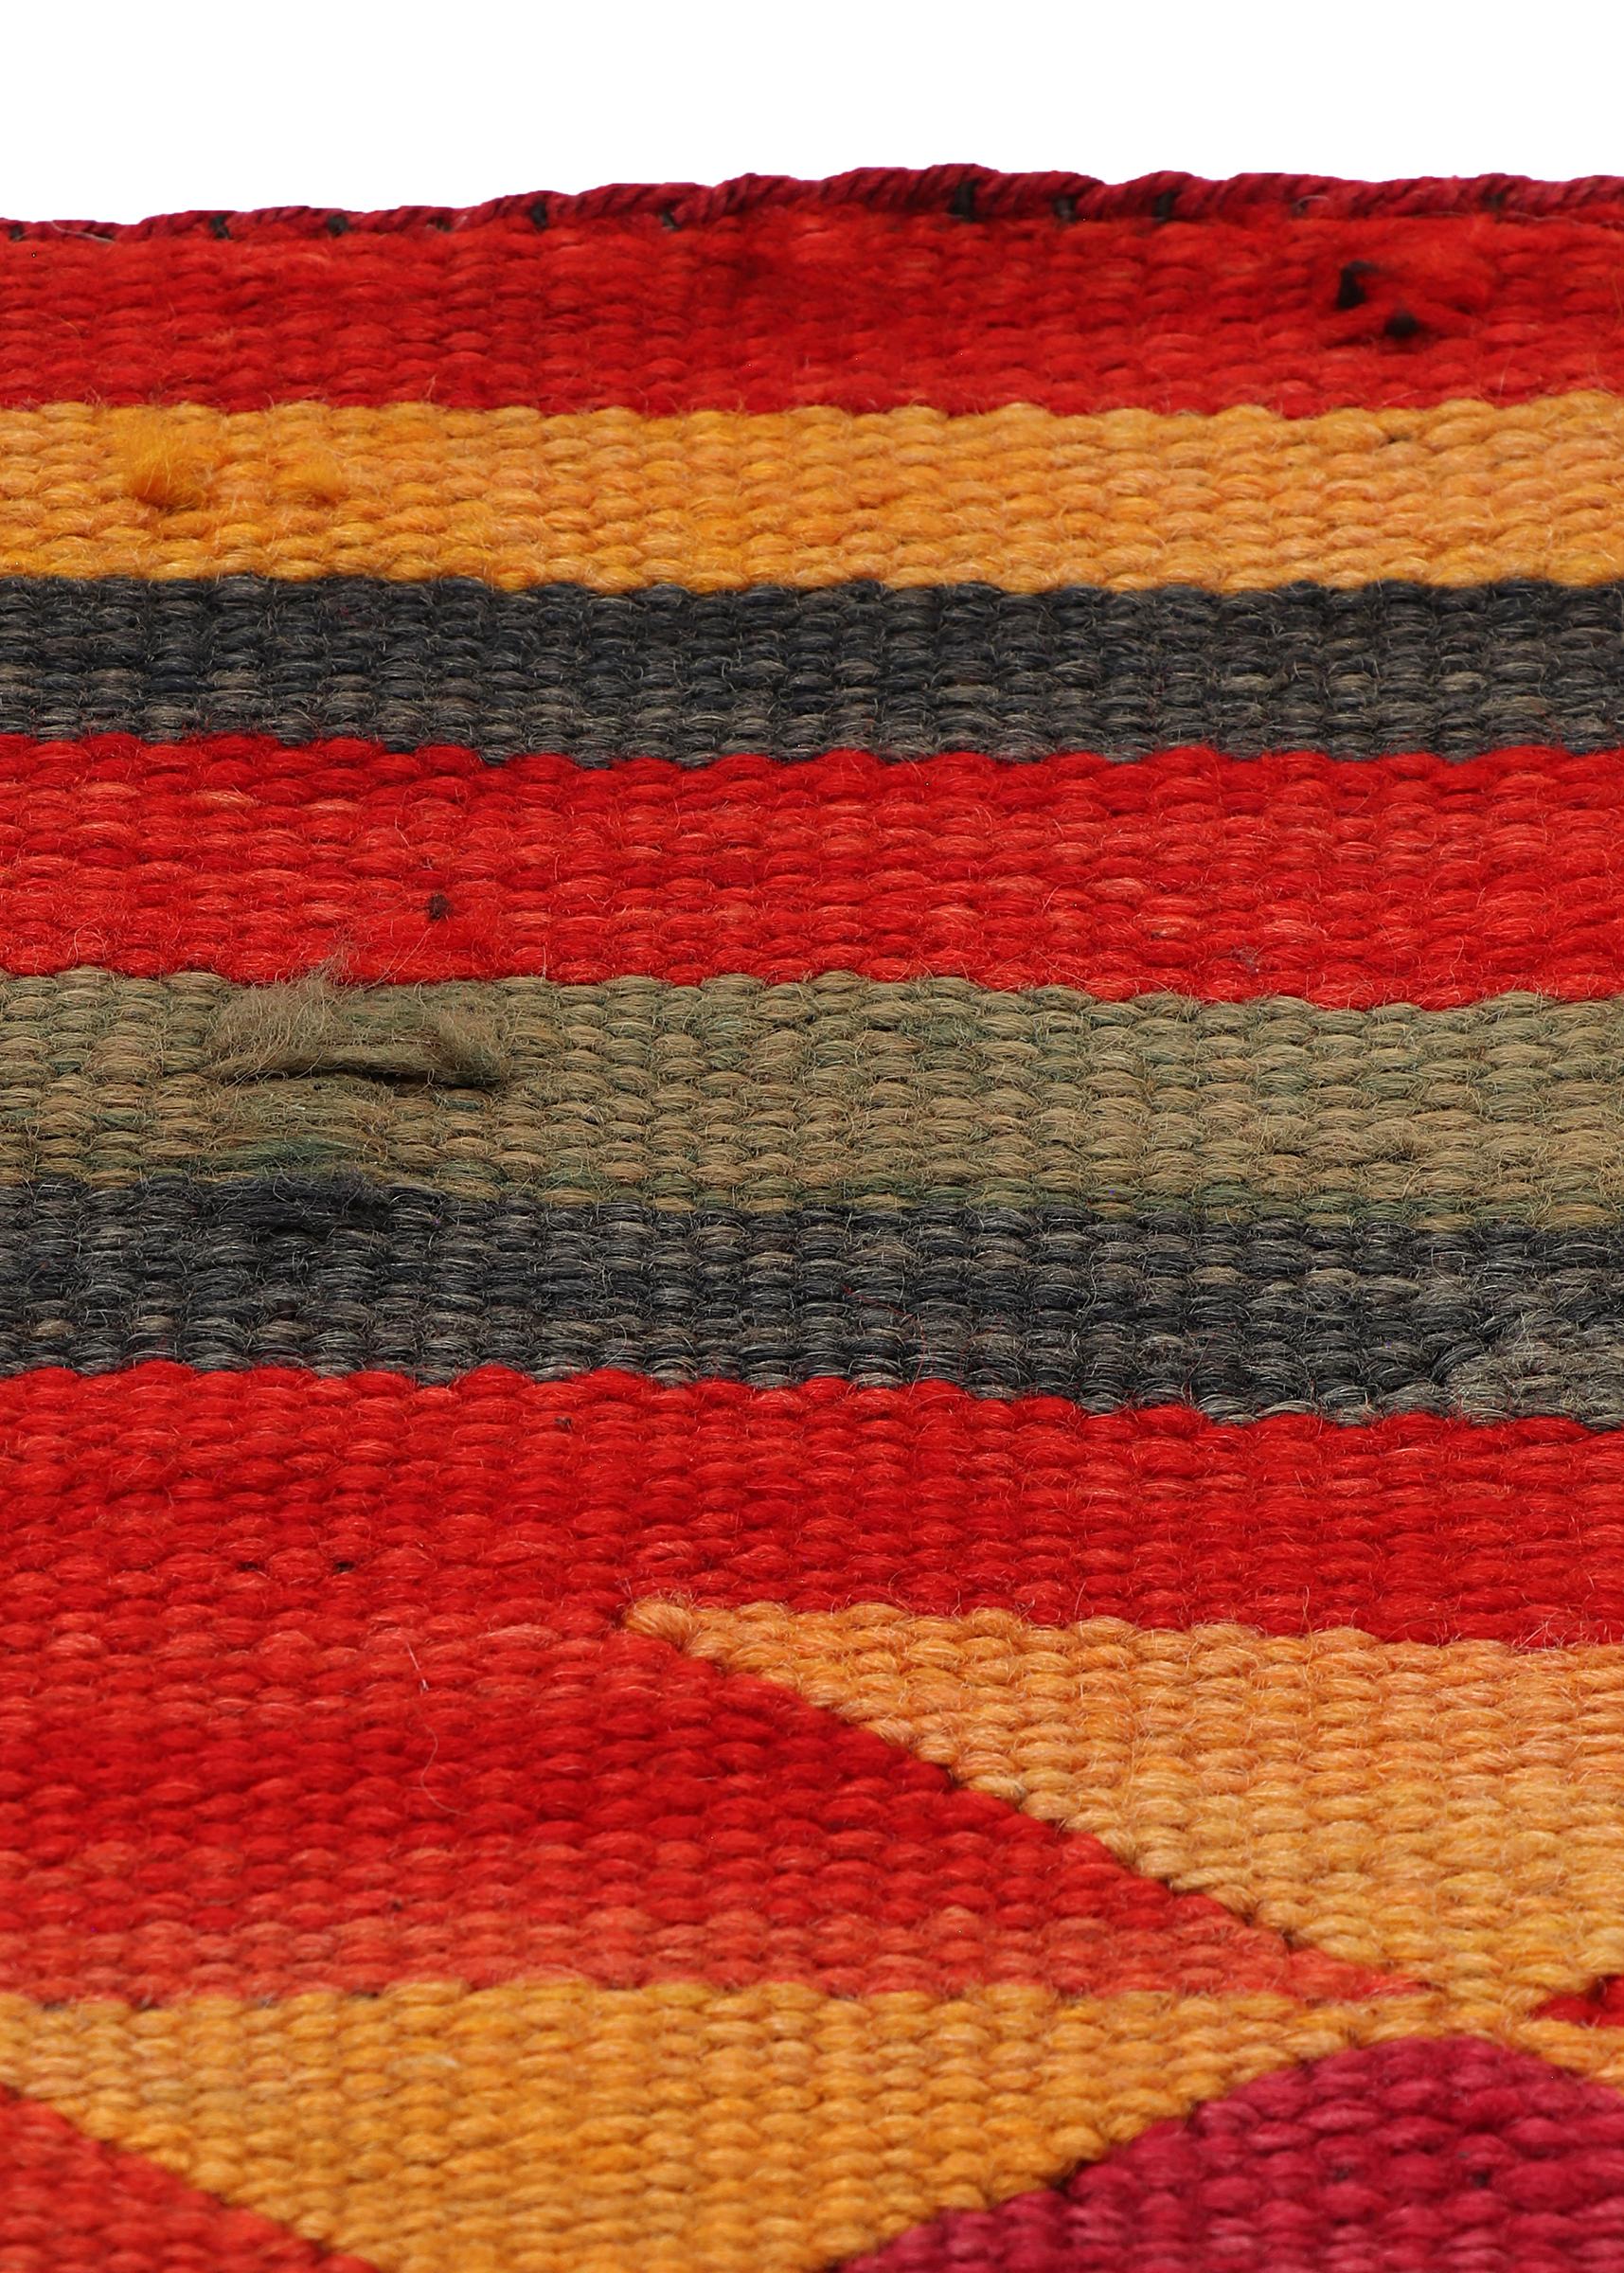 Wool 1885 Navajo Weaving in Jewel Tones, Red, Yellow, Orange, and Brown